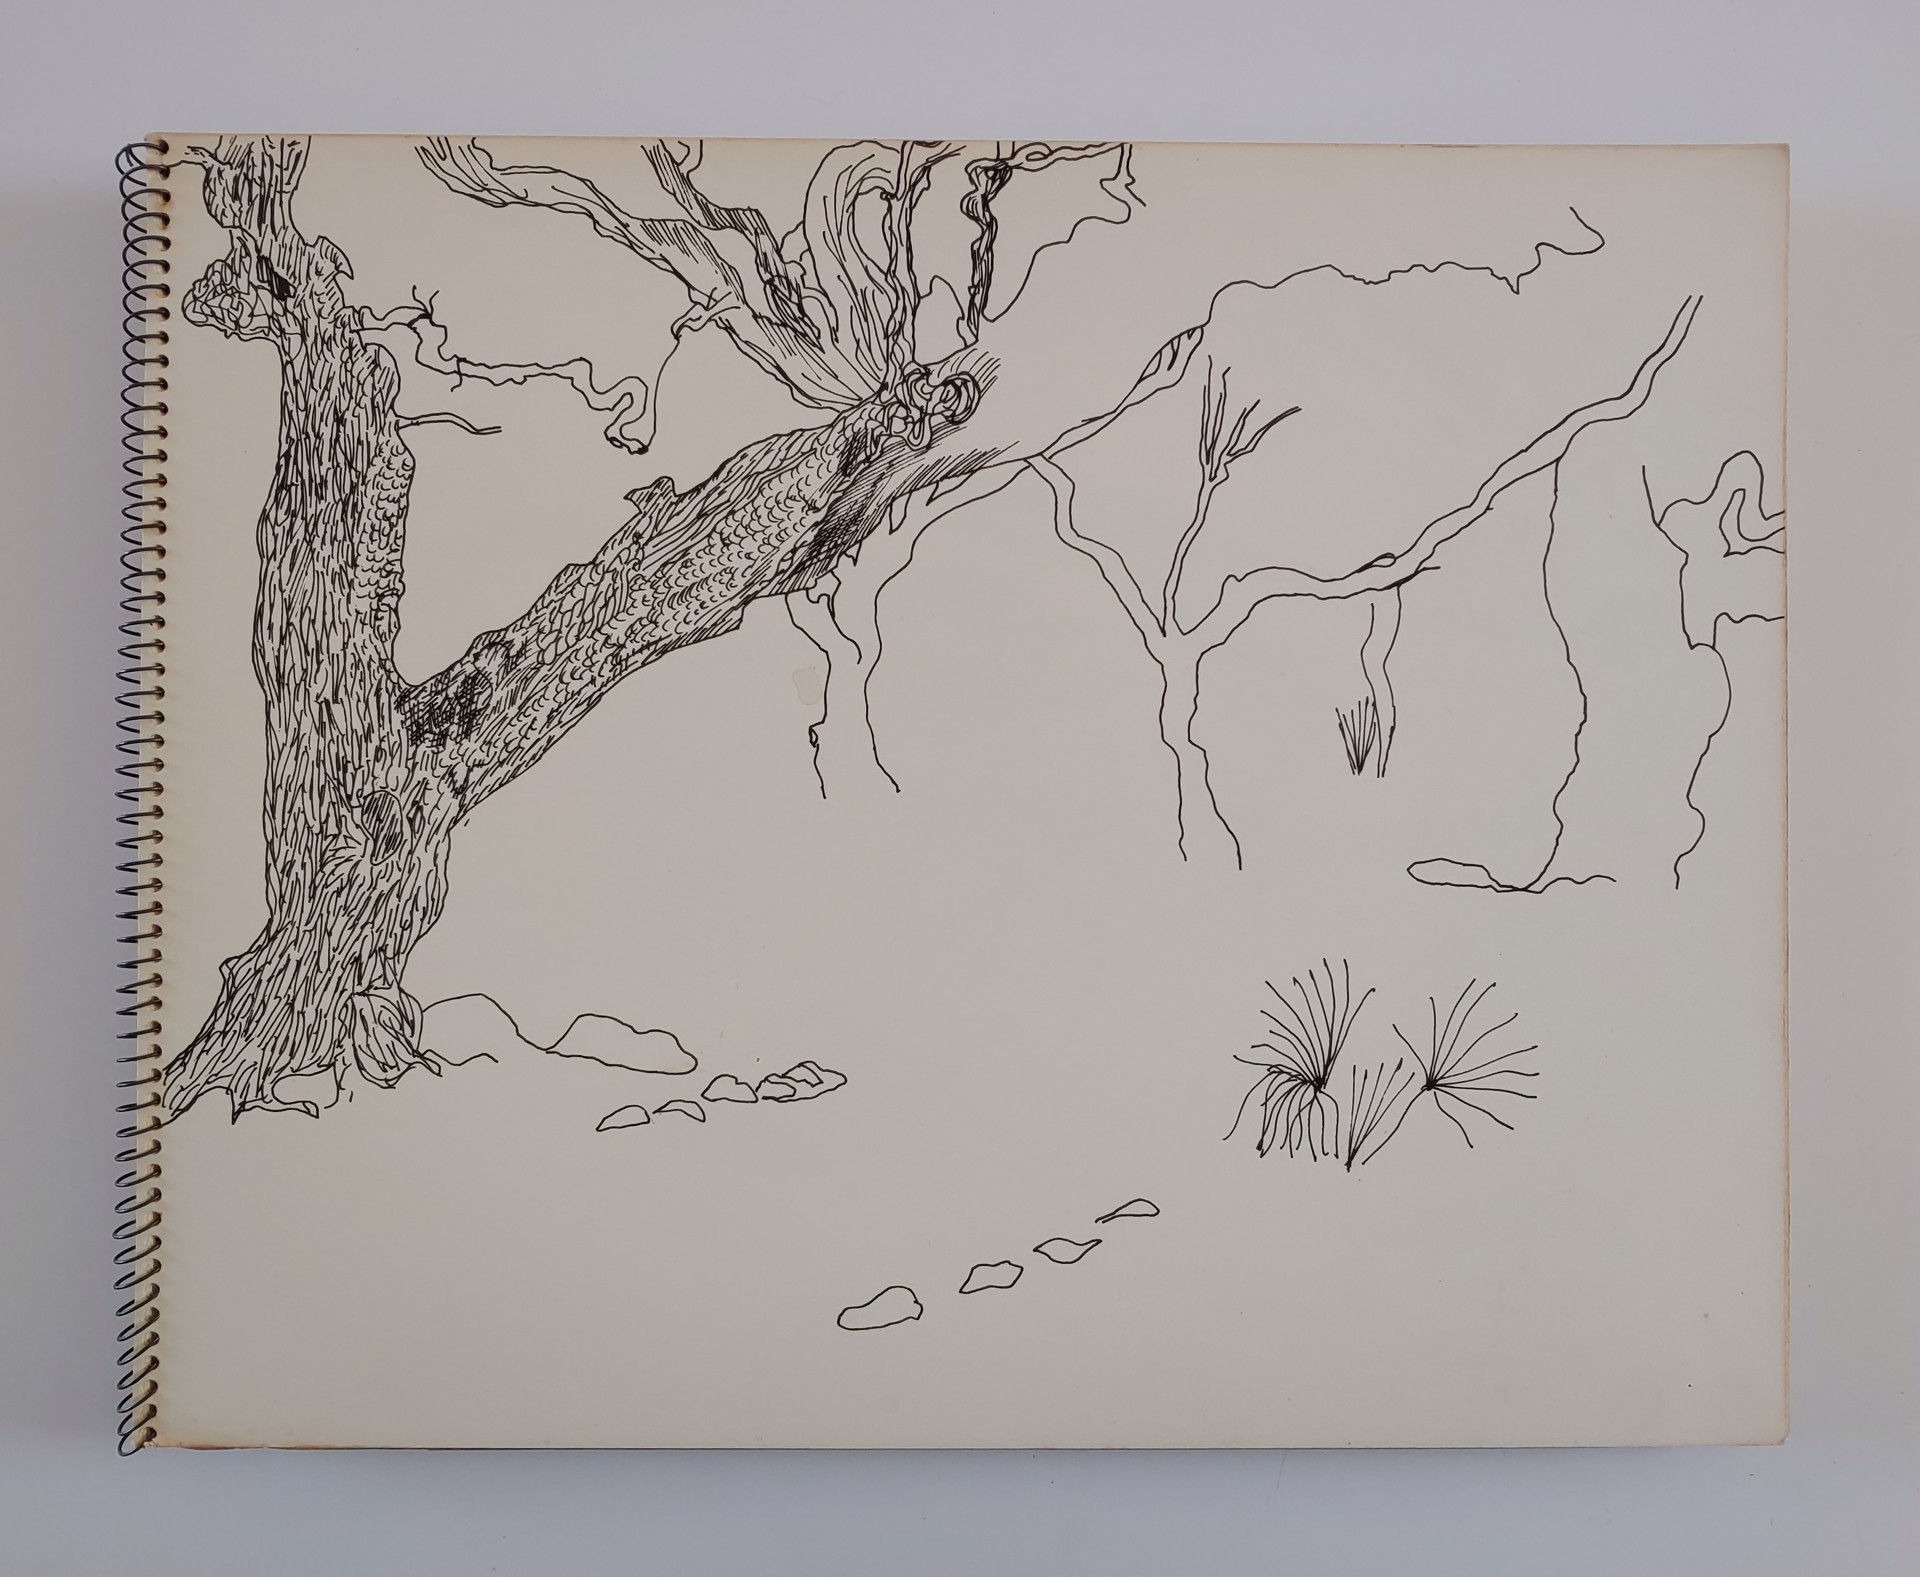 March 1972 Sketchbook by David Amdur